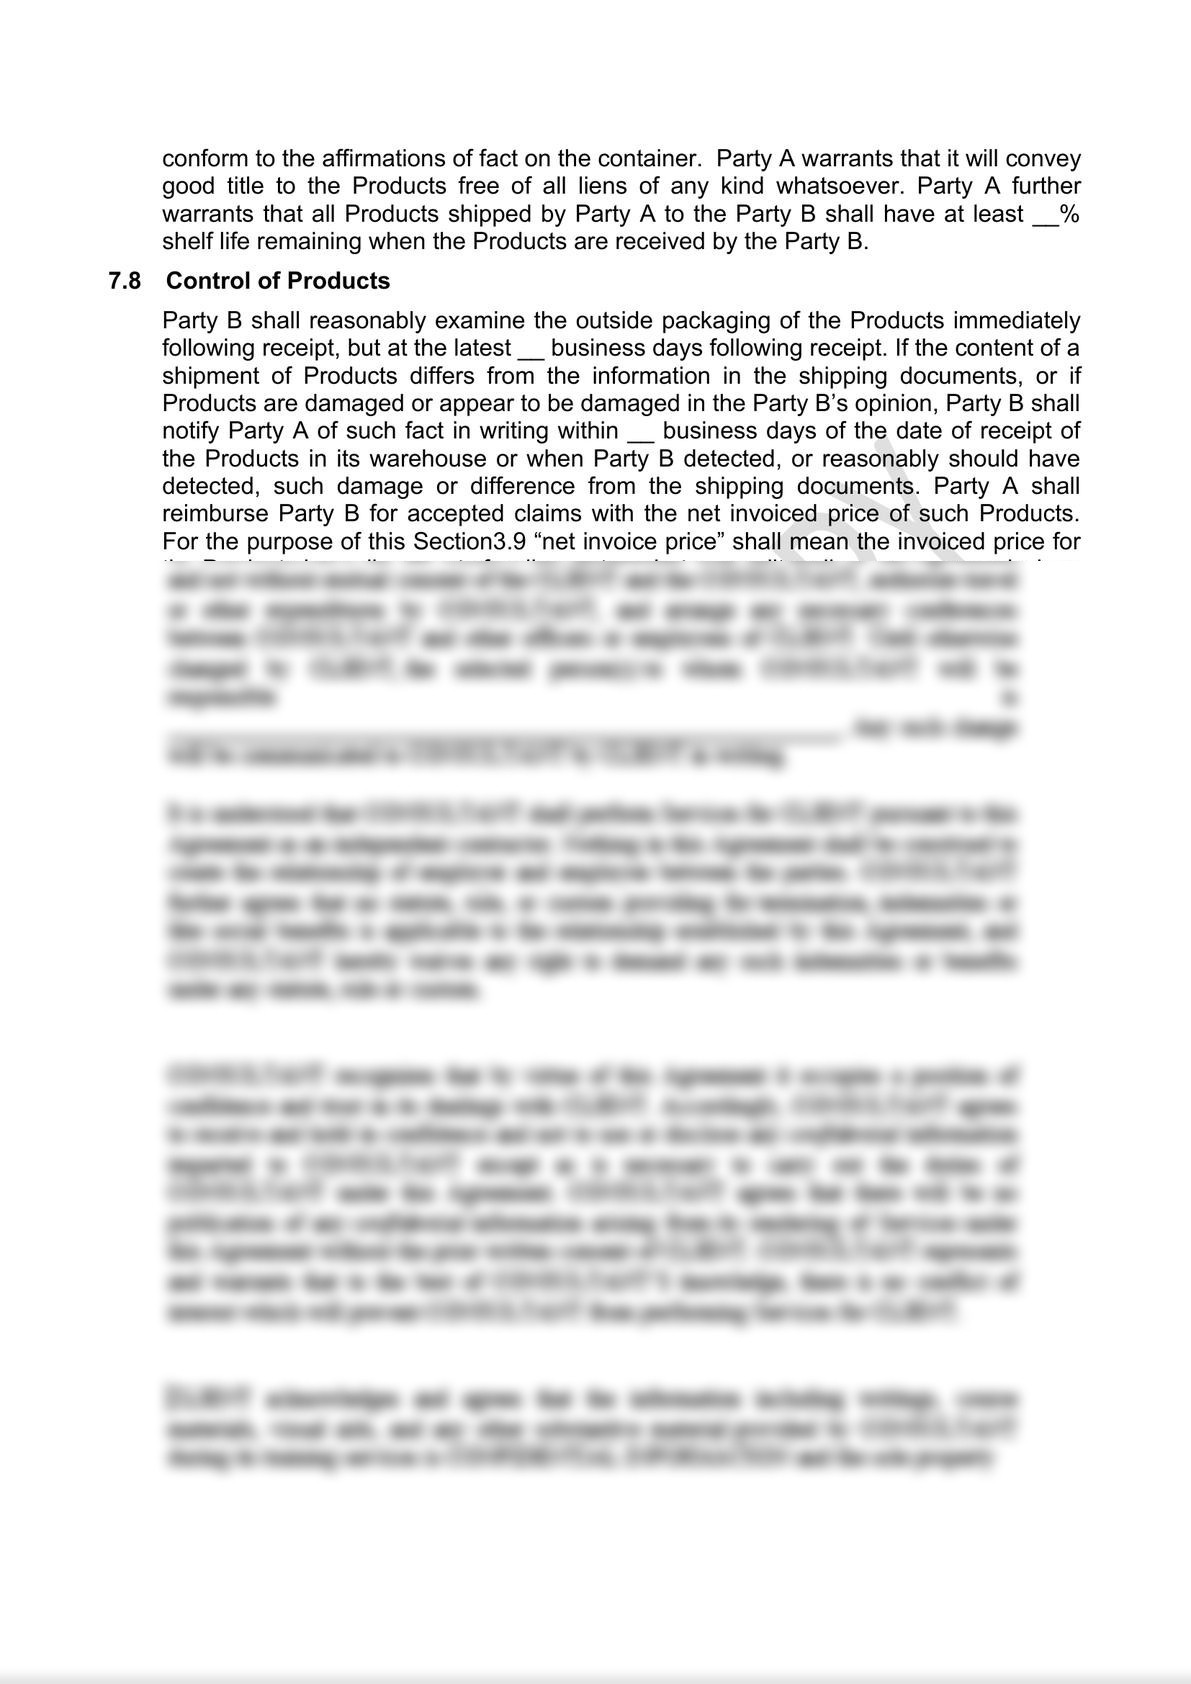 Distribution Agreement Draft (ii)-7